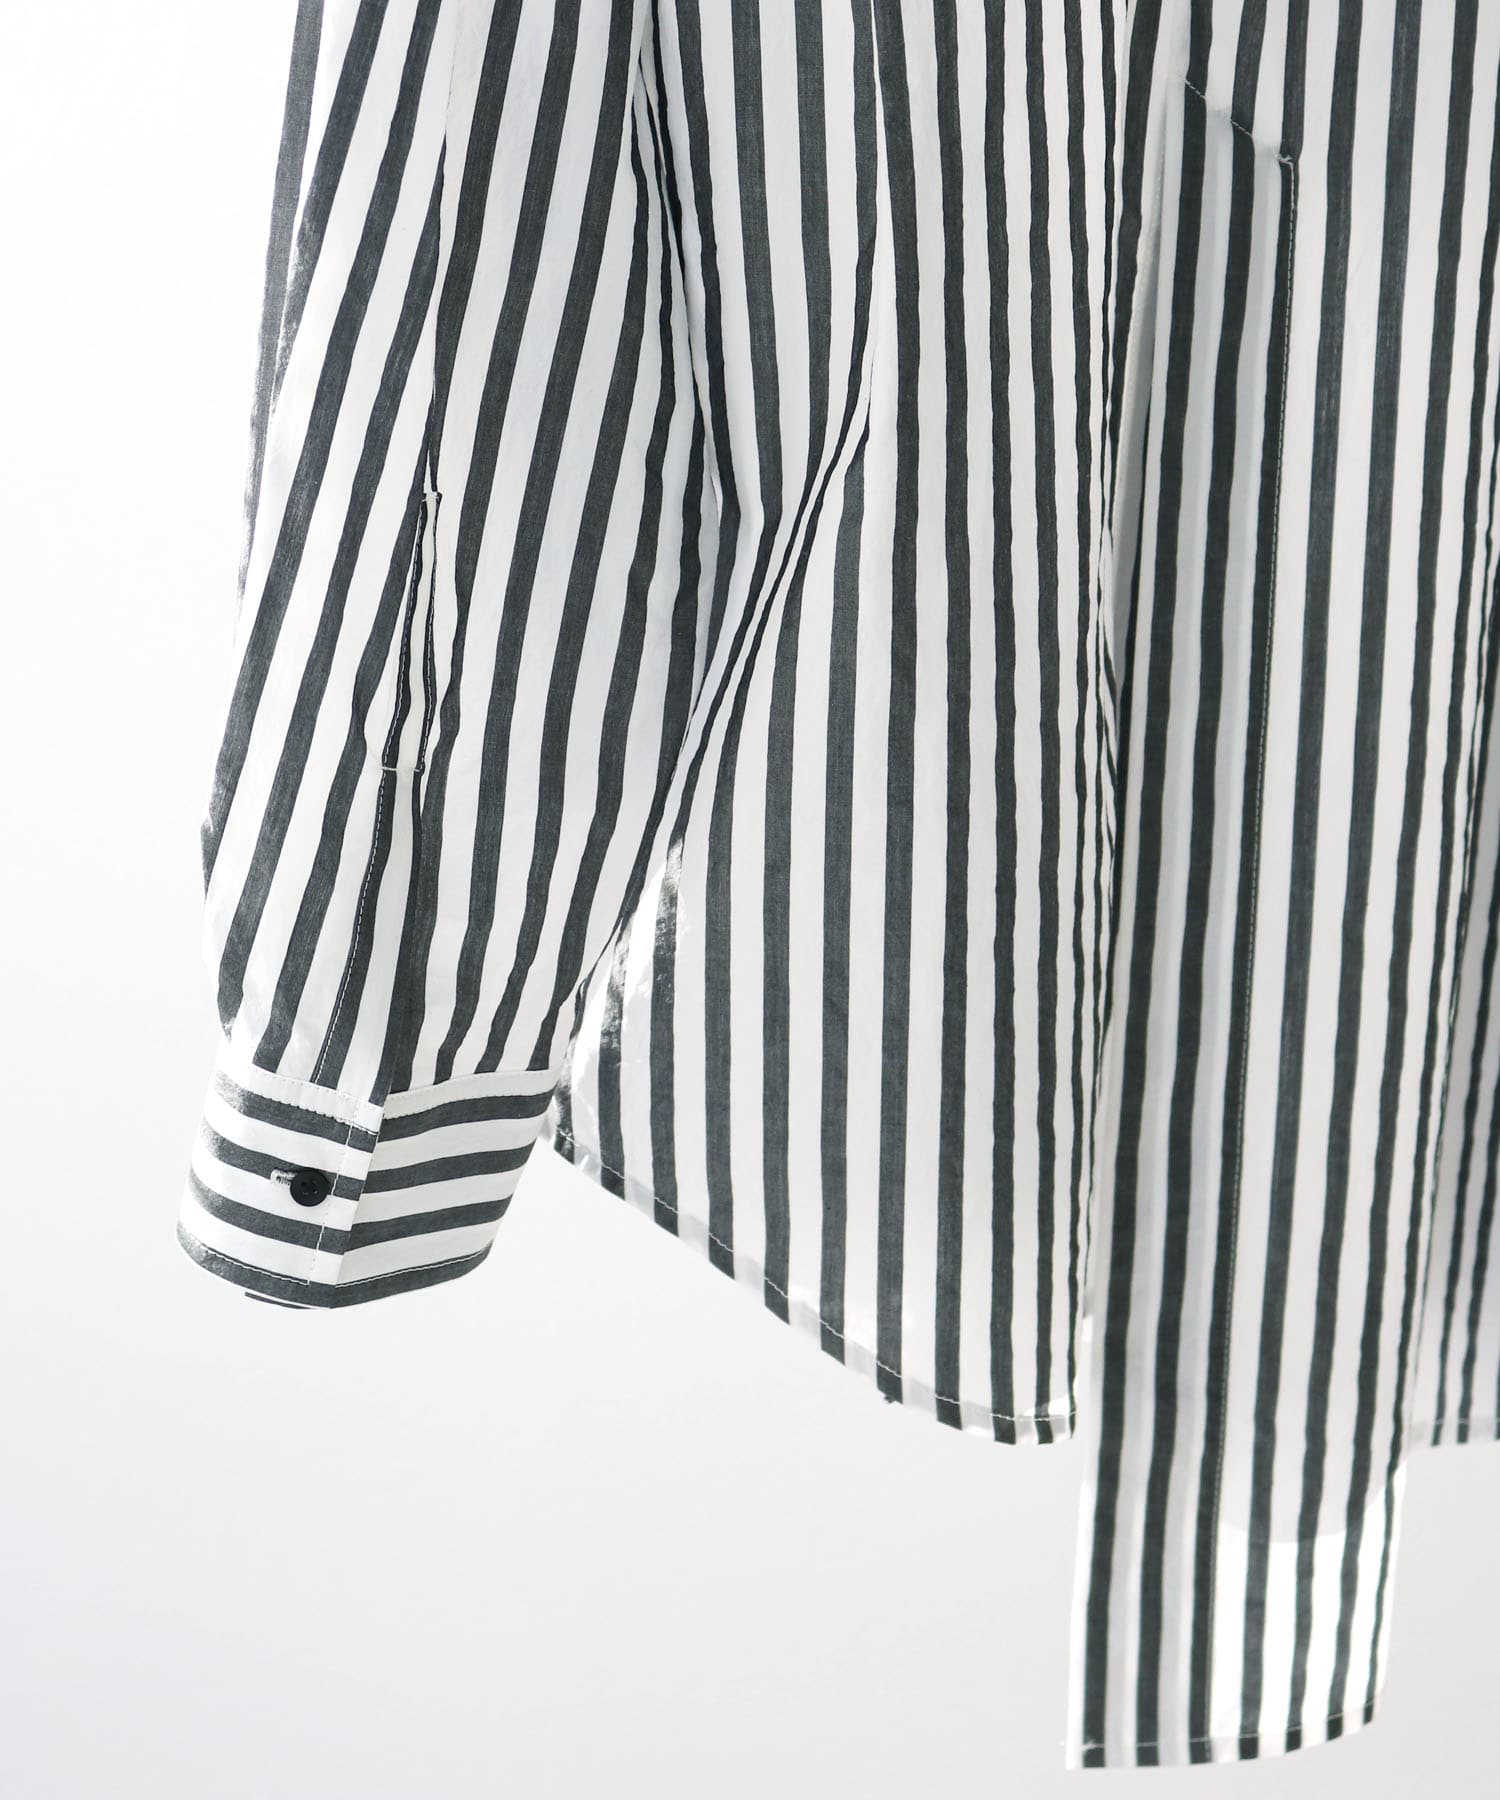 asymmetric stripe over shirt